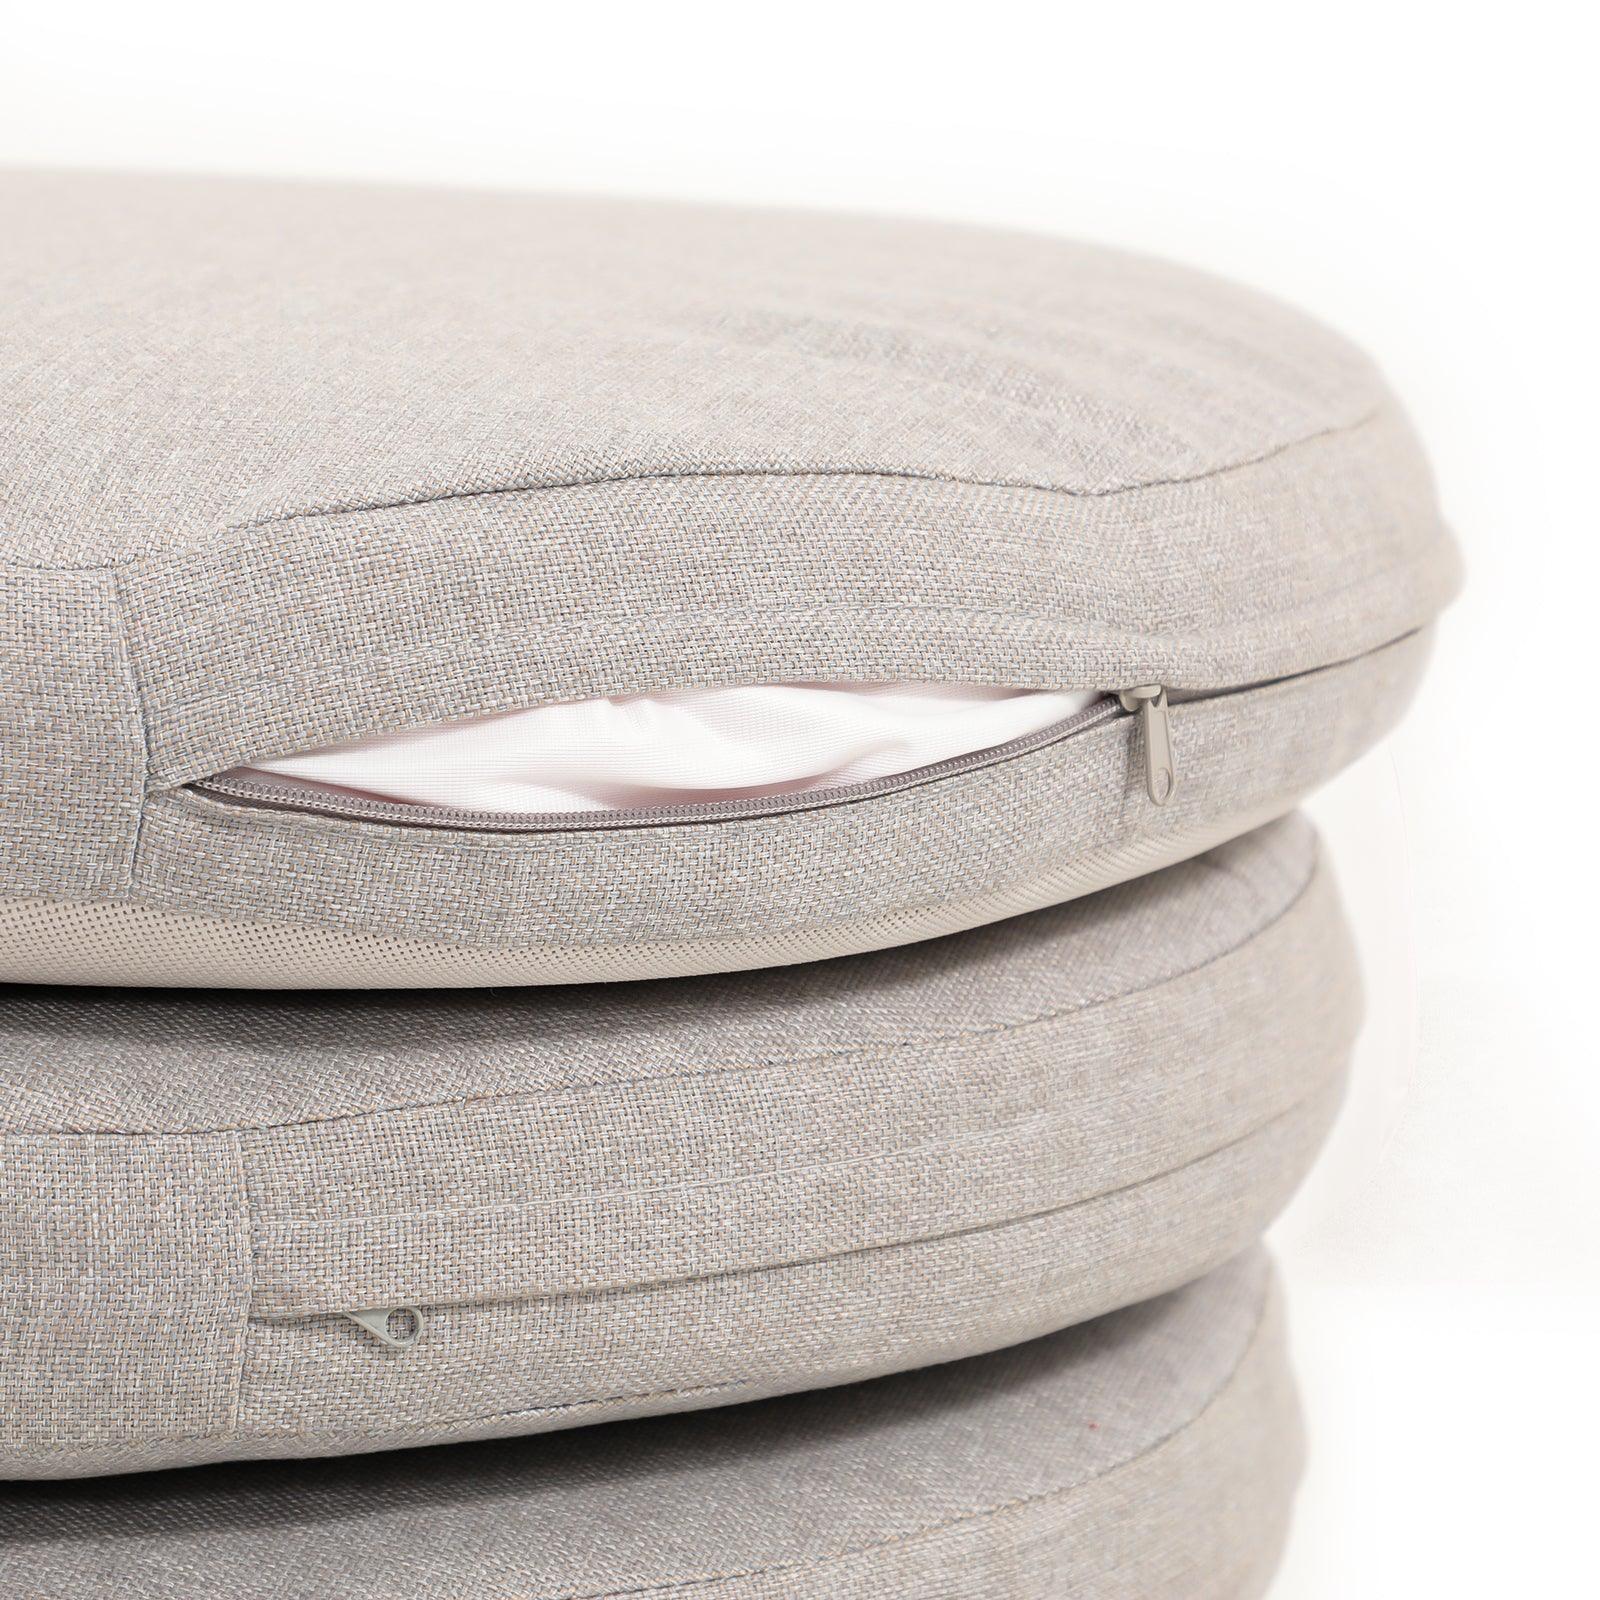 Comino light grey cushions detail, with zippers- Jardina Furniture